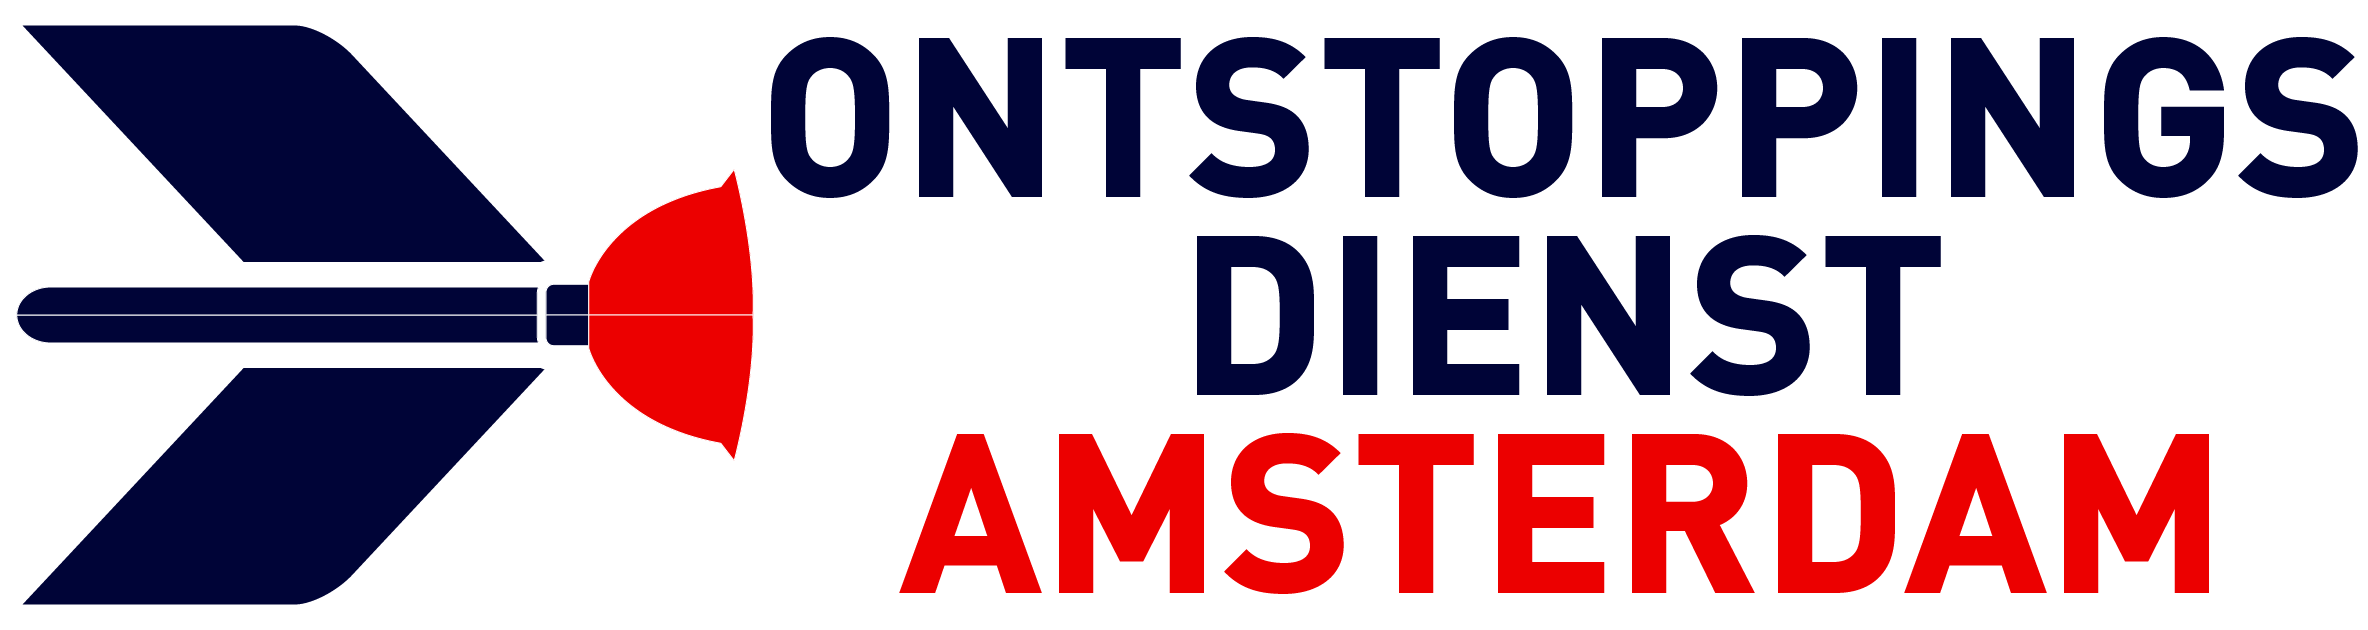 Ontstoppingsdienst Amsterdam logo